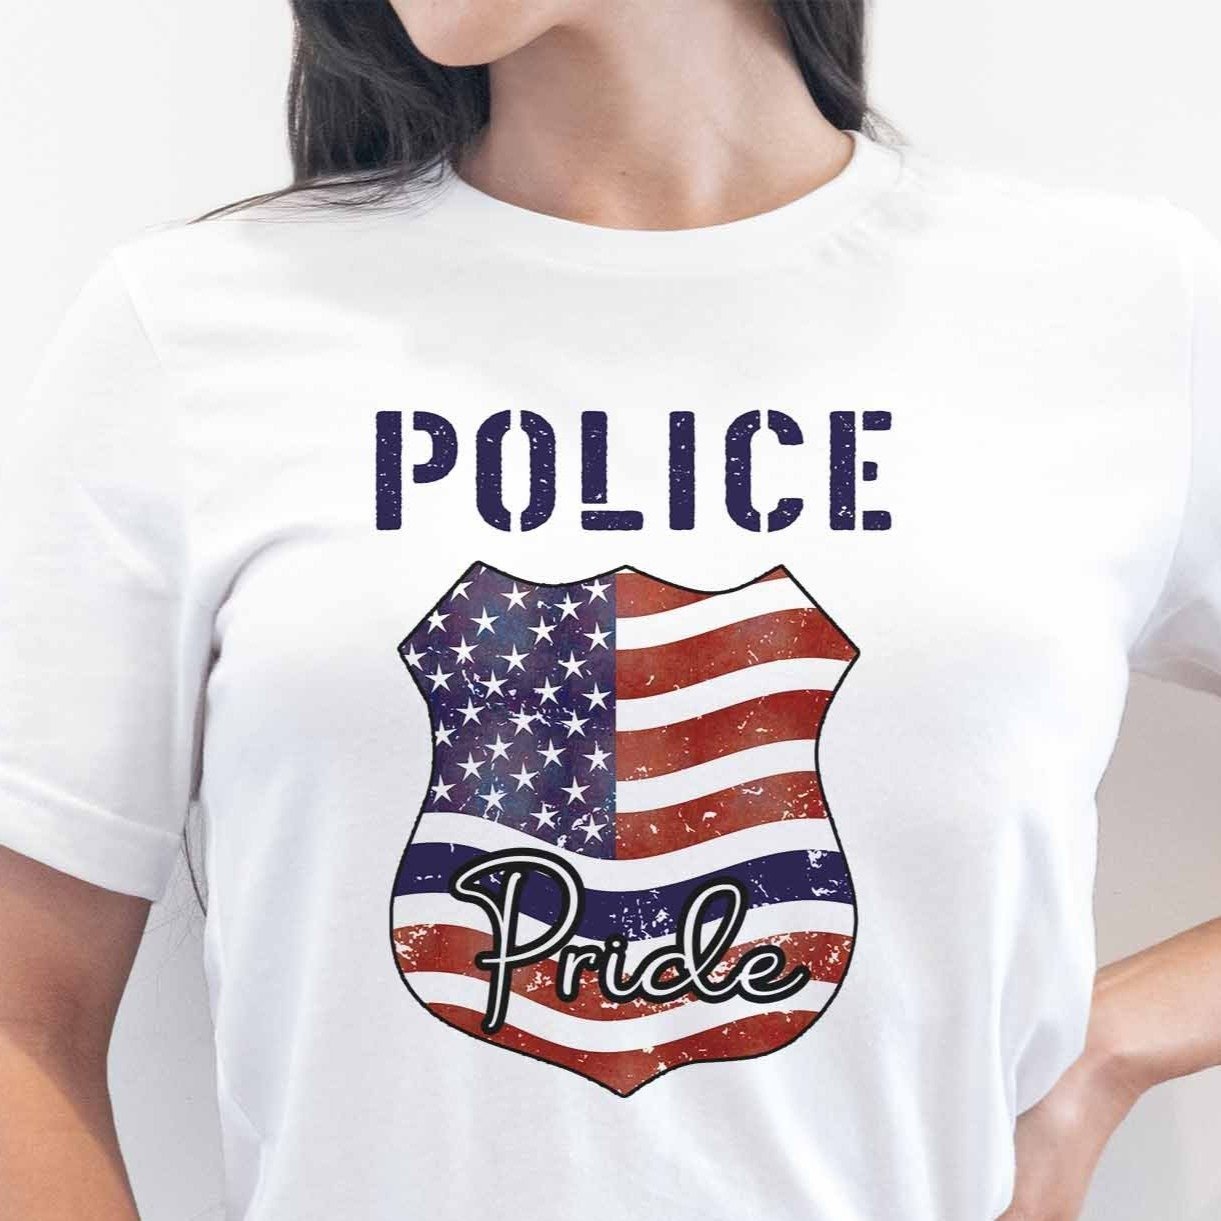 Police Pride - My Custom Tee Party